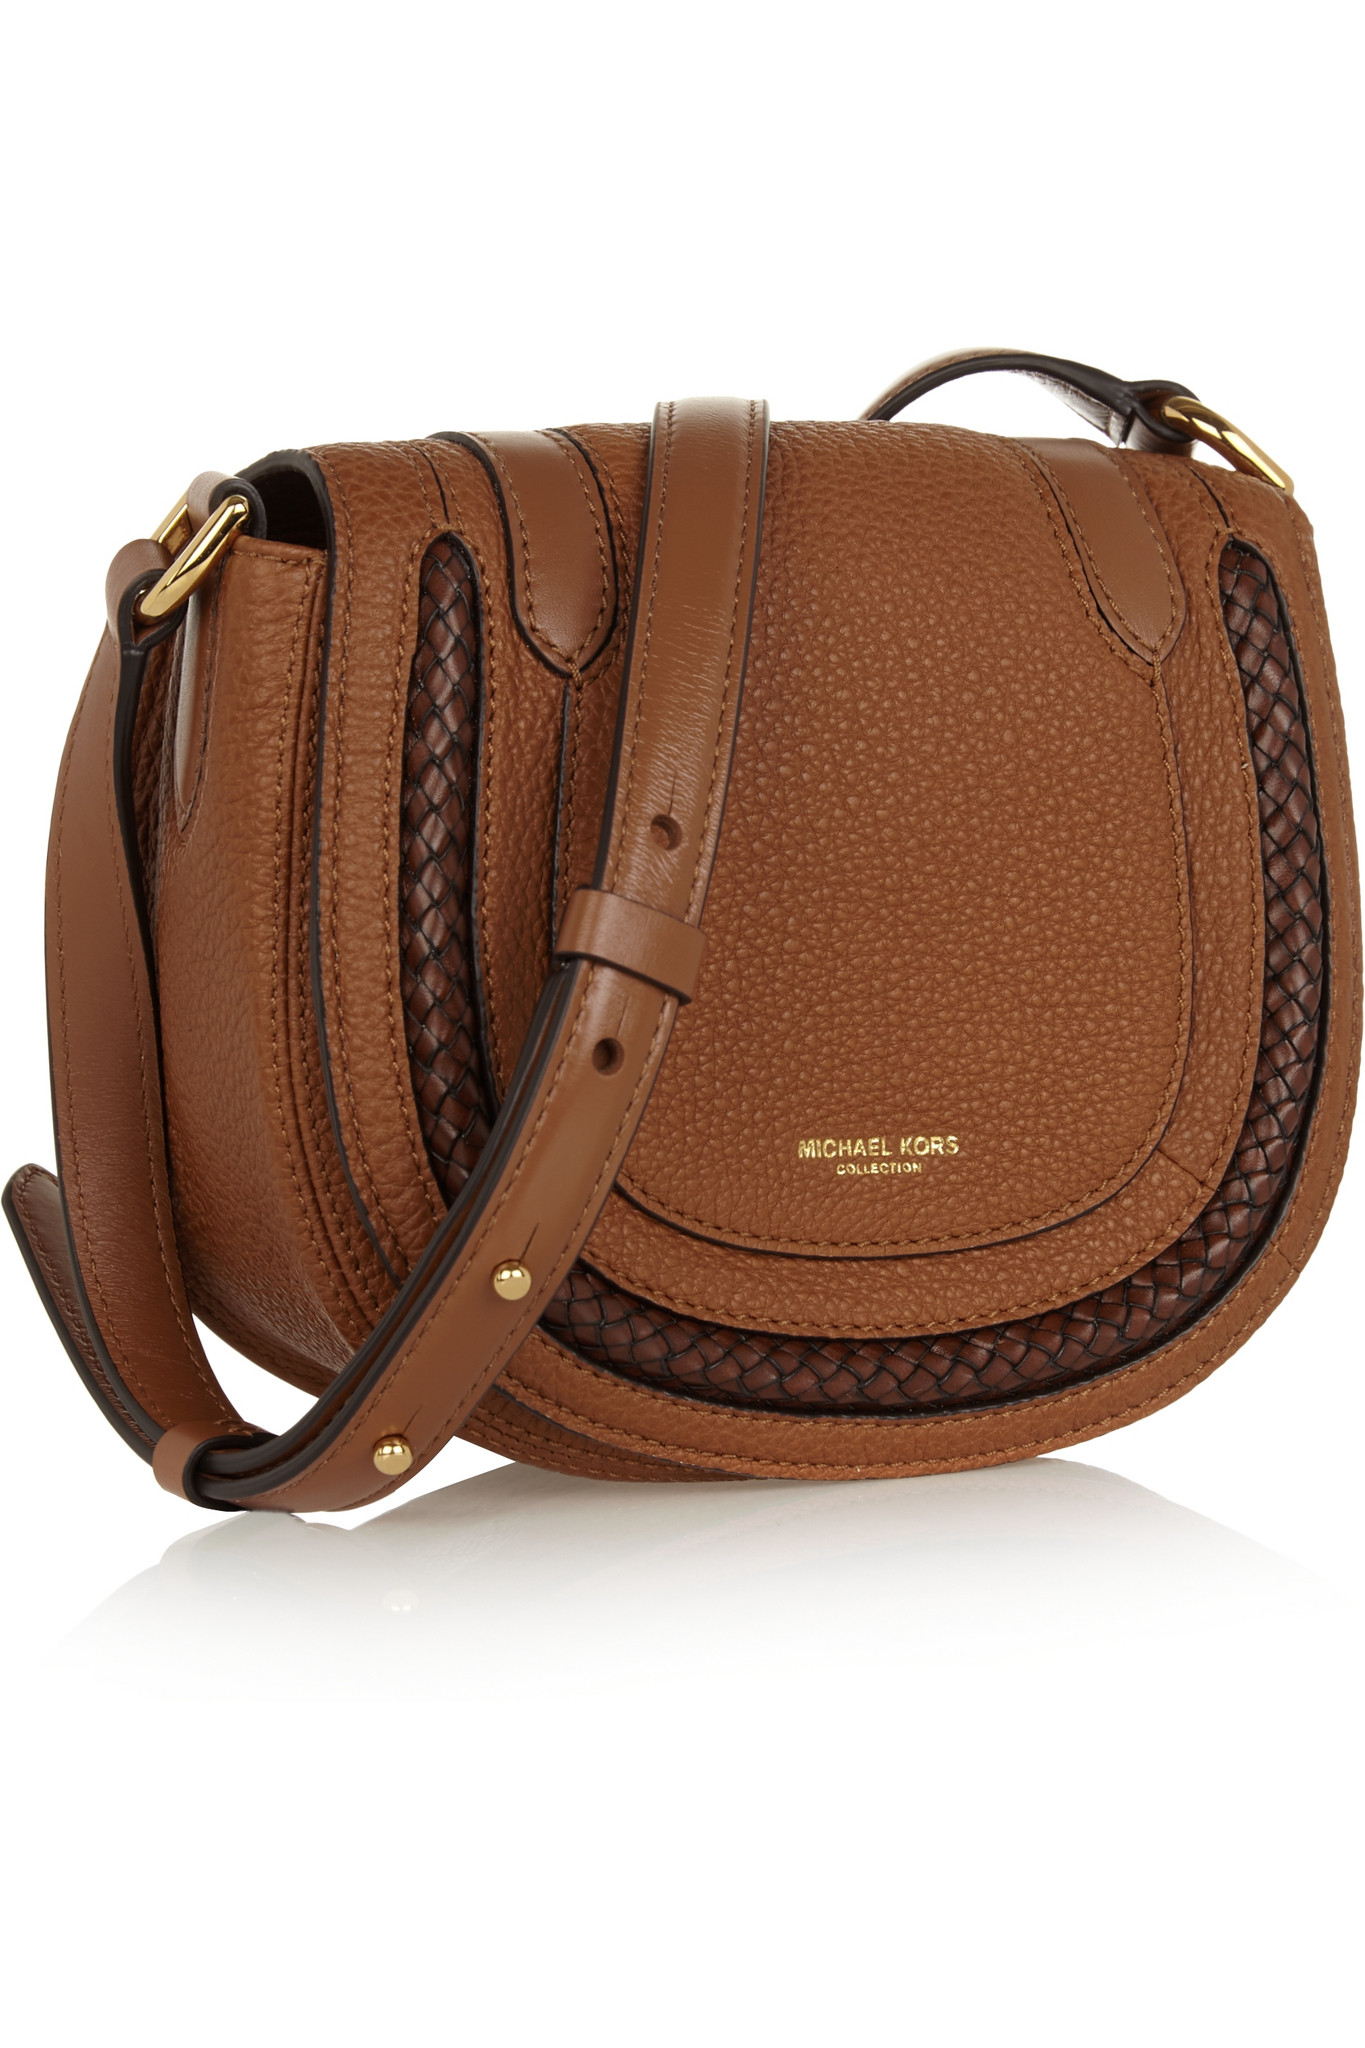 Michael Kors Skorpios Small Textured-leather Shoulder Bag in Brown - Lyst